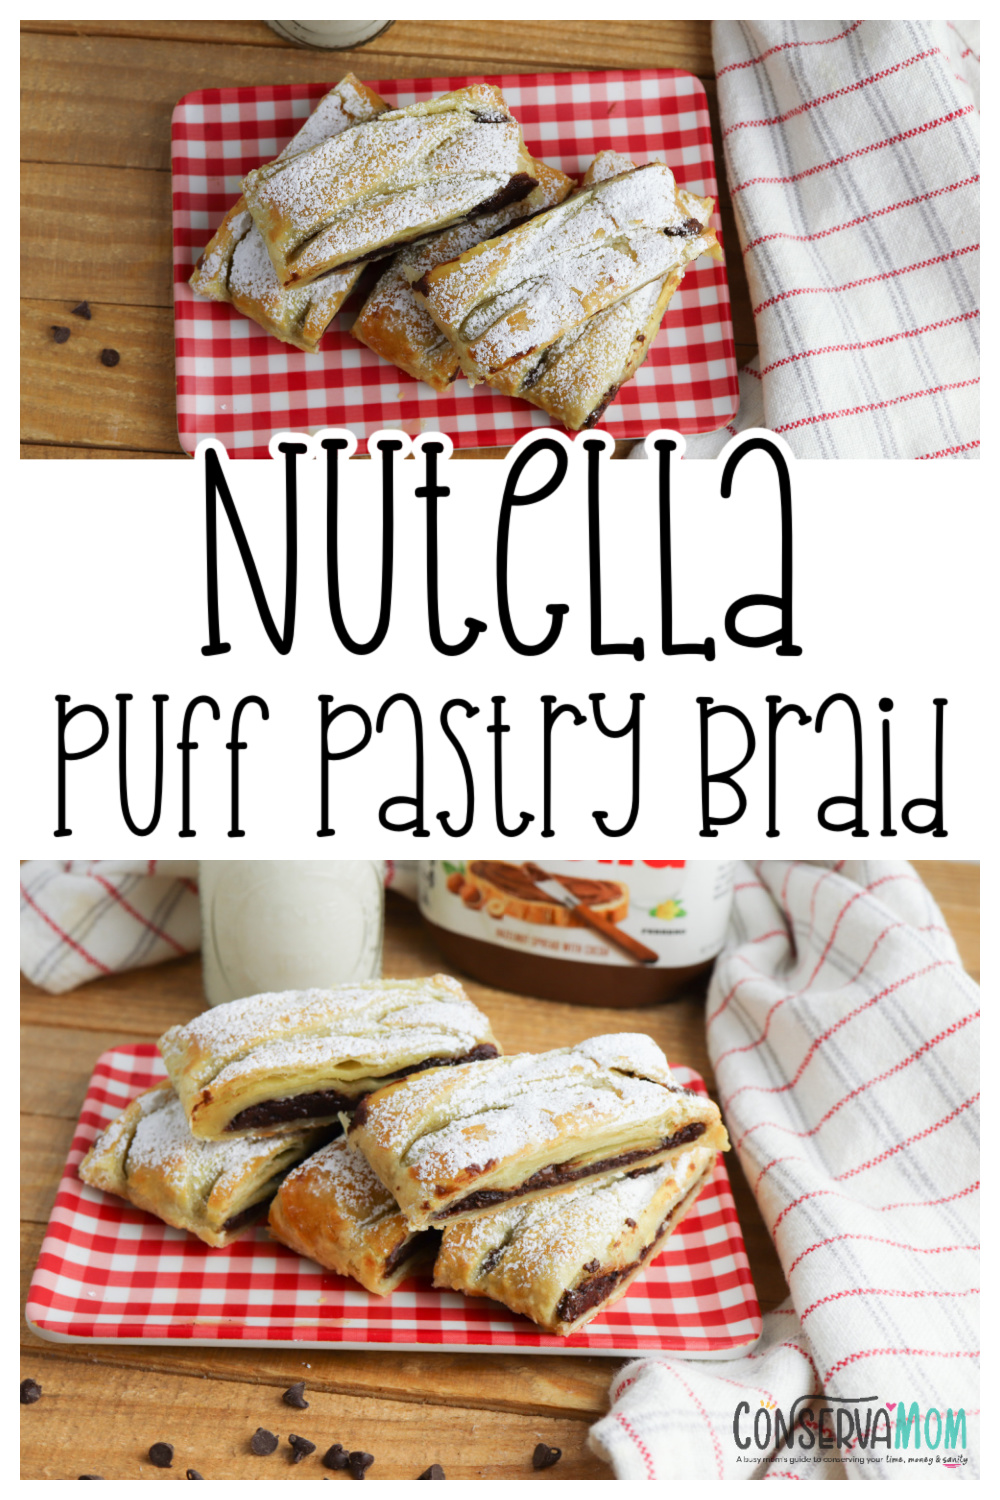 Nutella Puff Pastry Braid